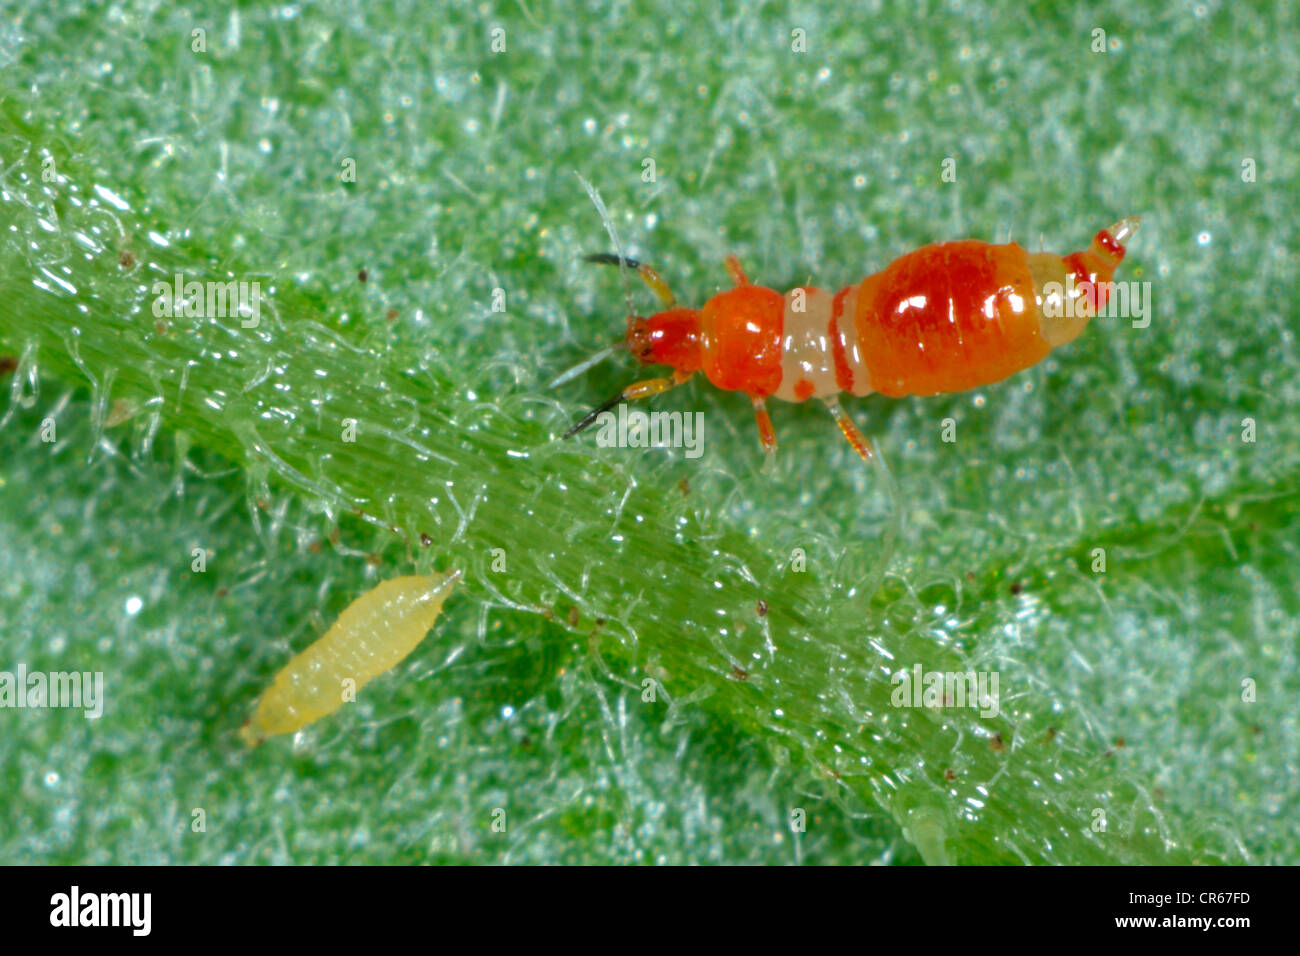 Predatory thrips (Franklinothrips vespiformis) larva with western flower thrips larva prey Stock Photo